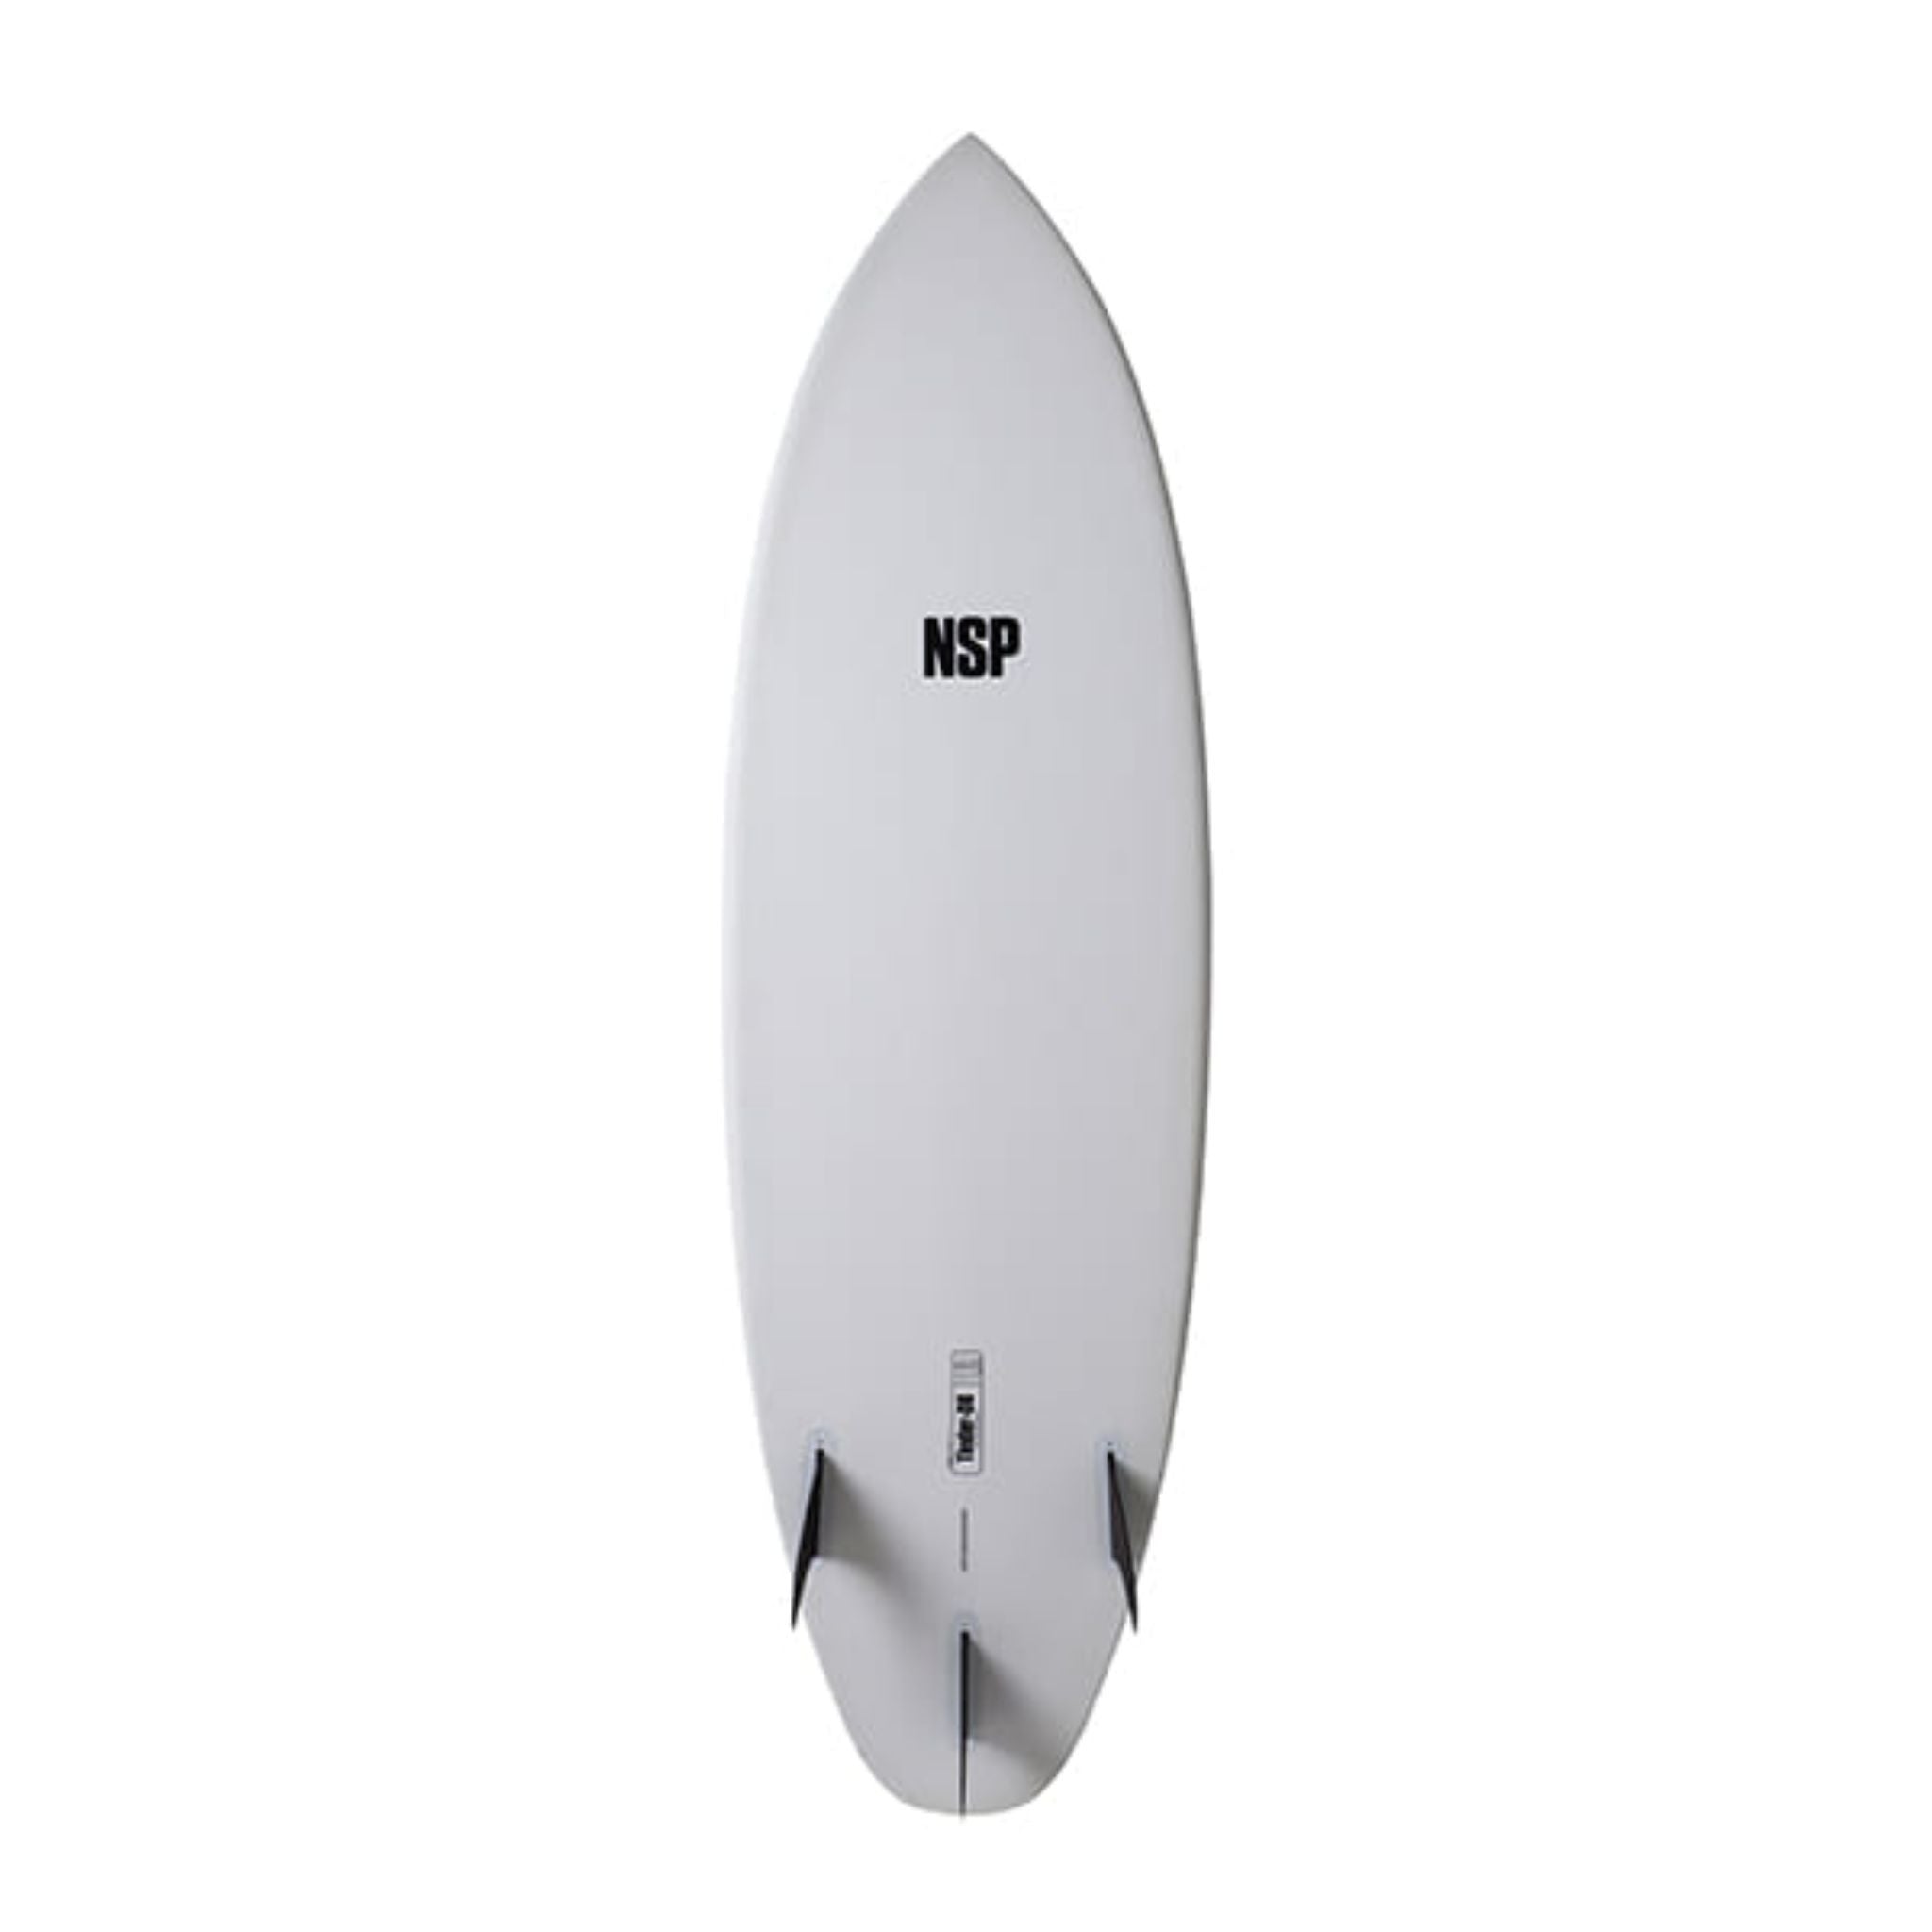 Nsp Protech Tinder-d8 Surfboard